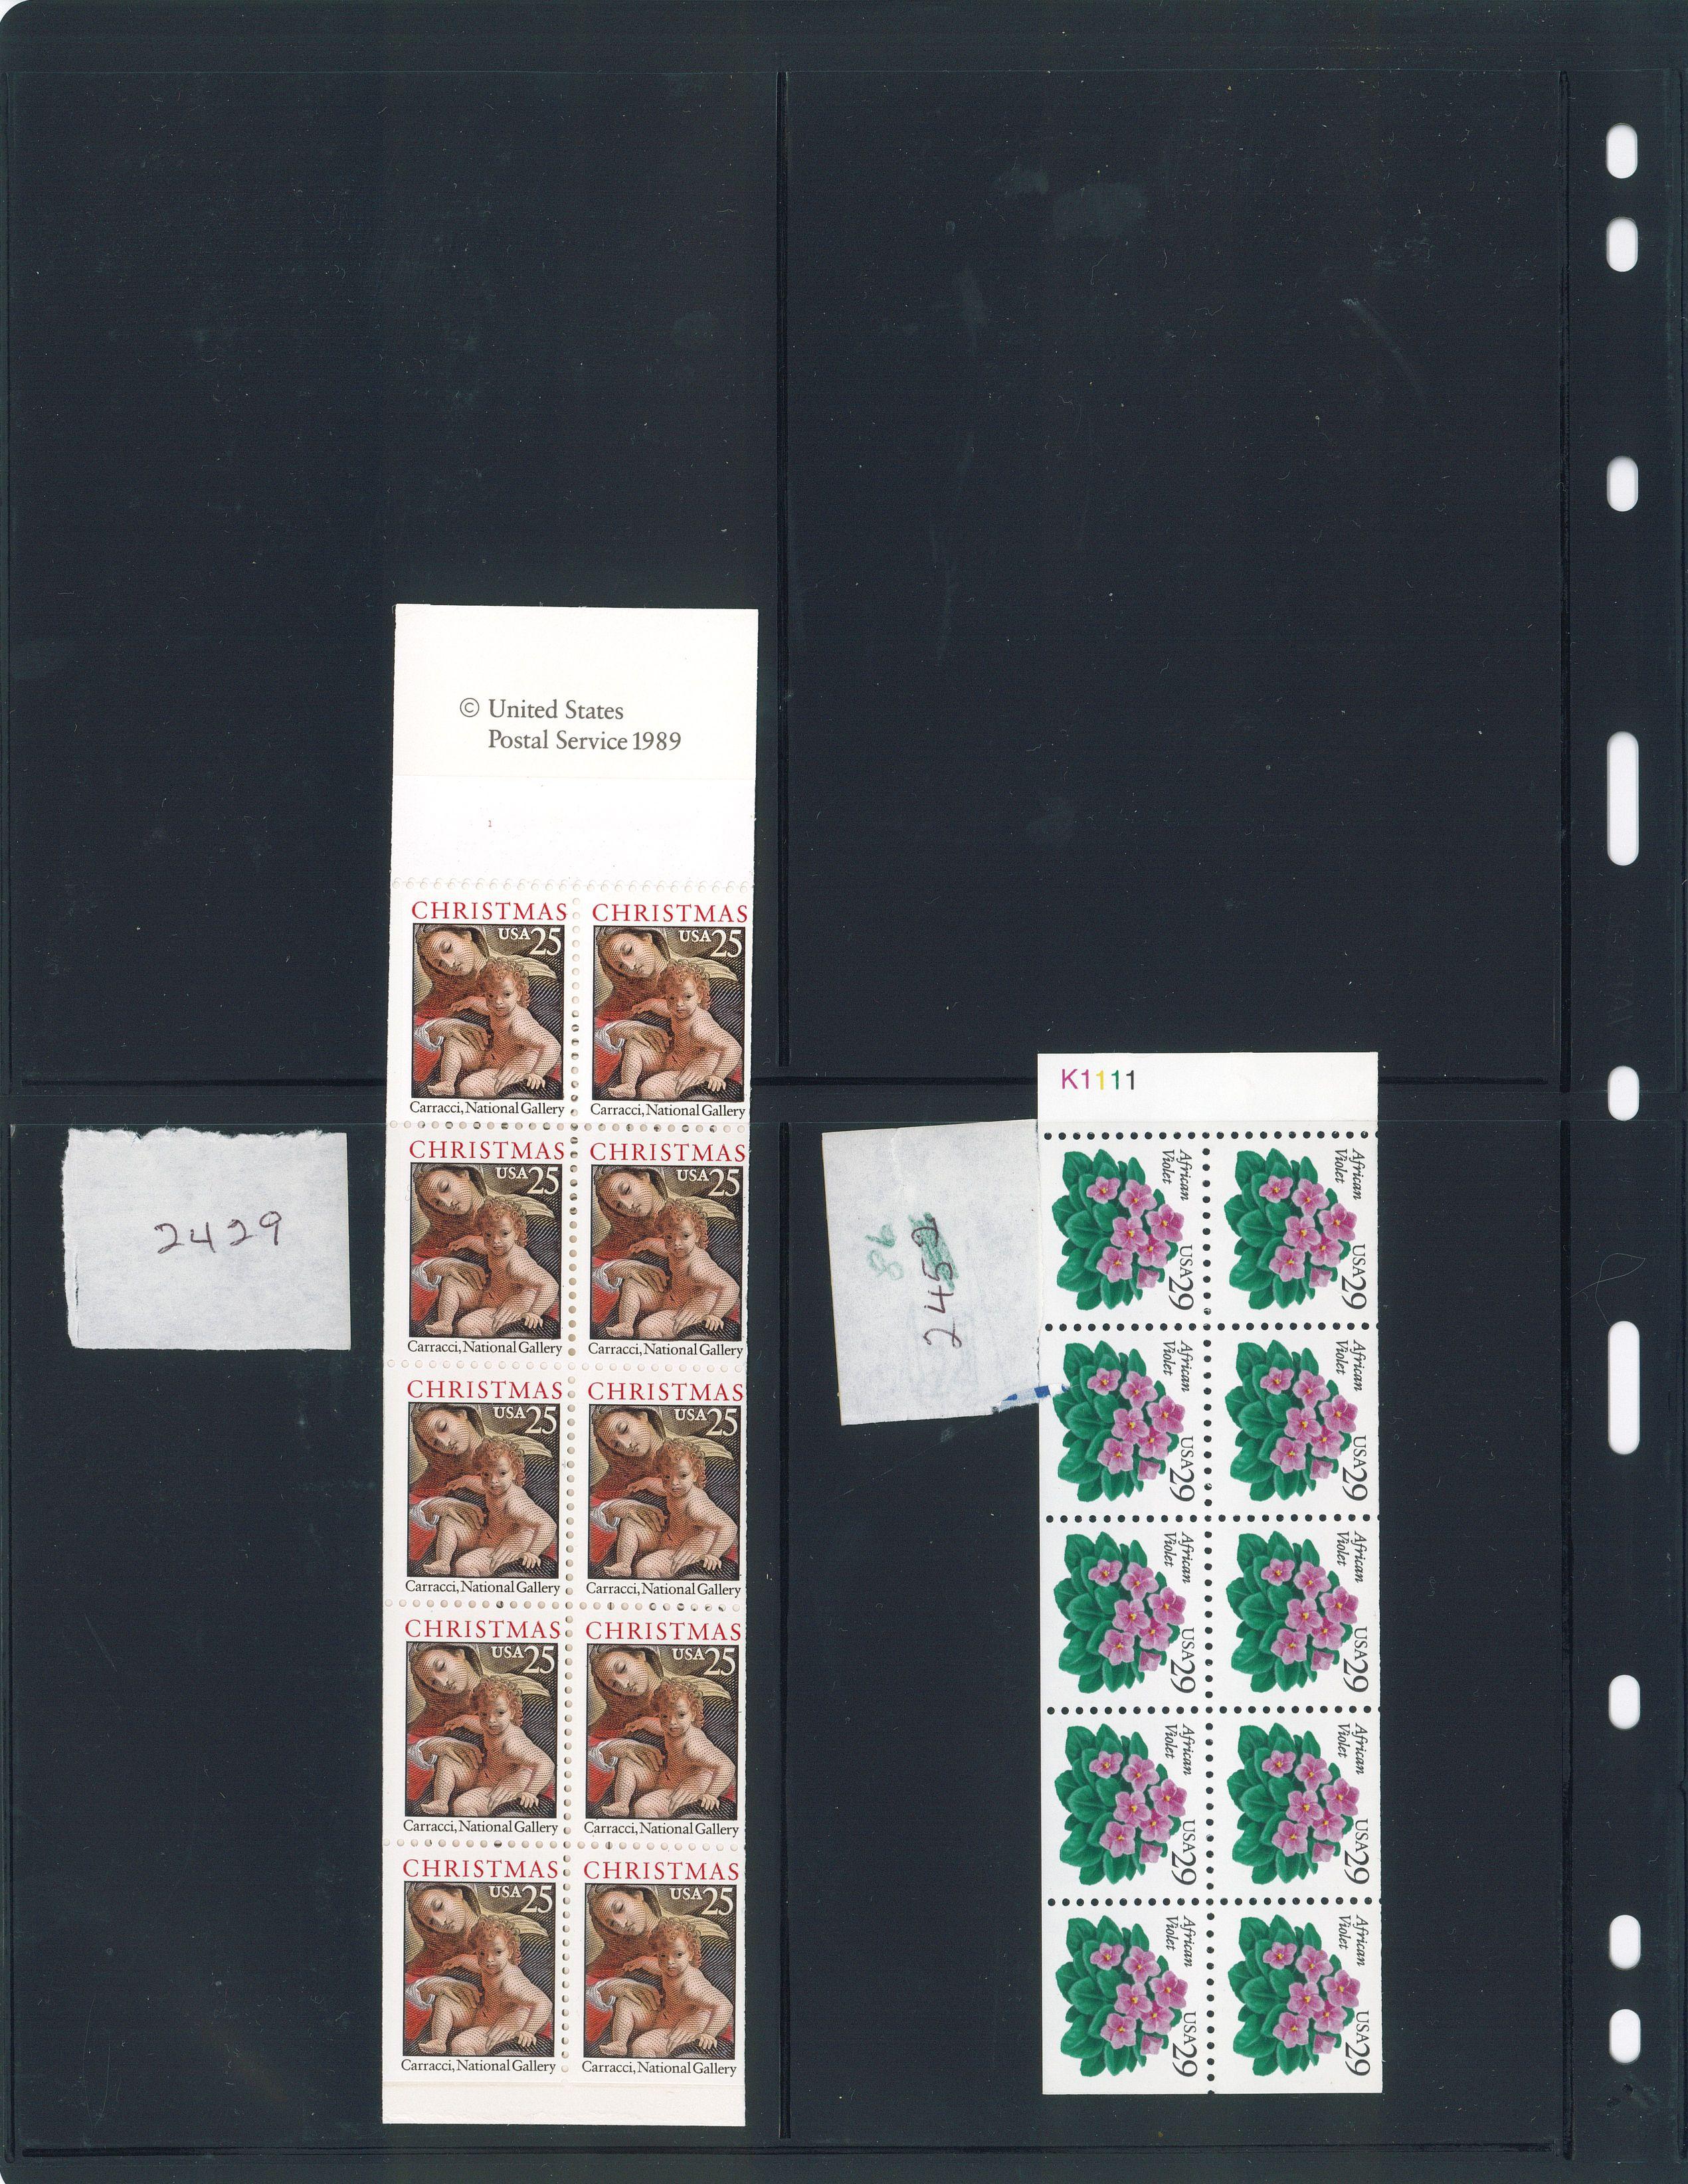 Assortment of USA Stamps (Scott #'s 2004-2998)